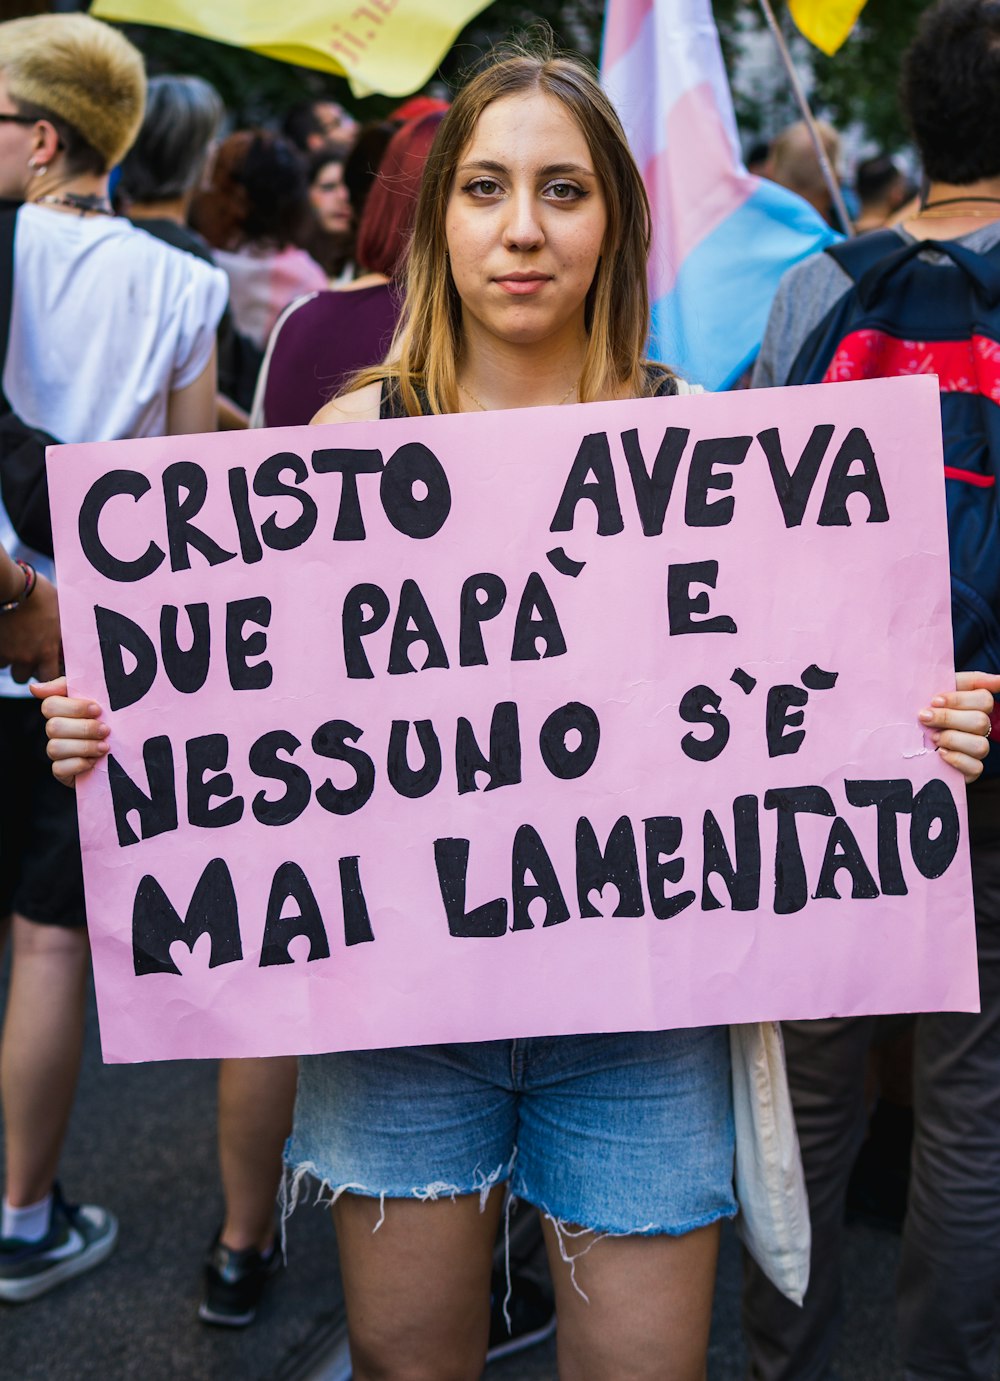 a woman holding a sign that says cristoo aveva due papa e ness